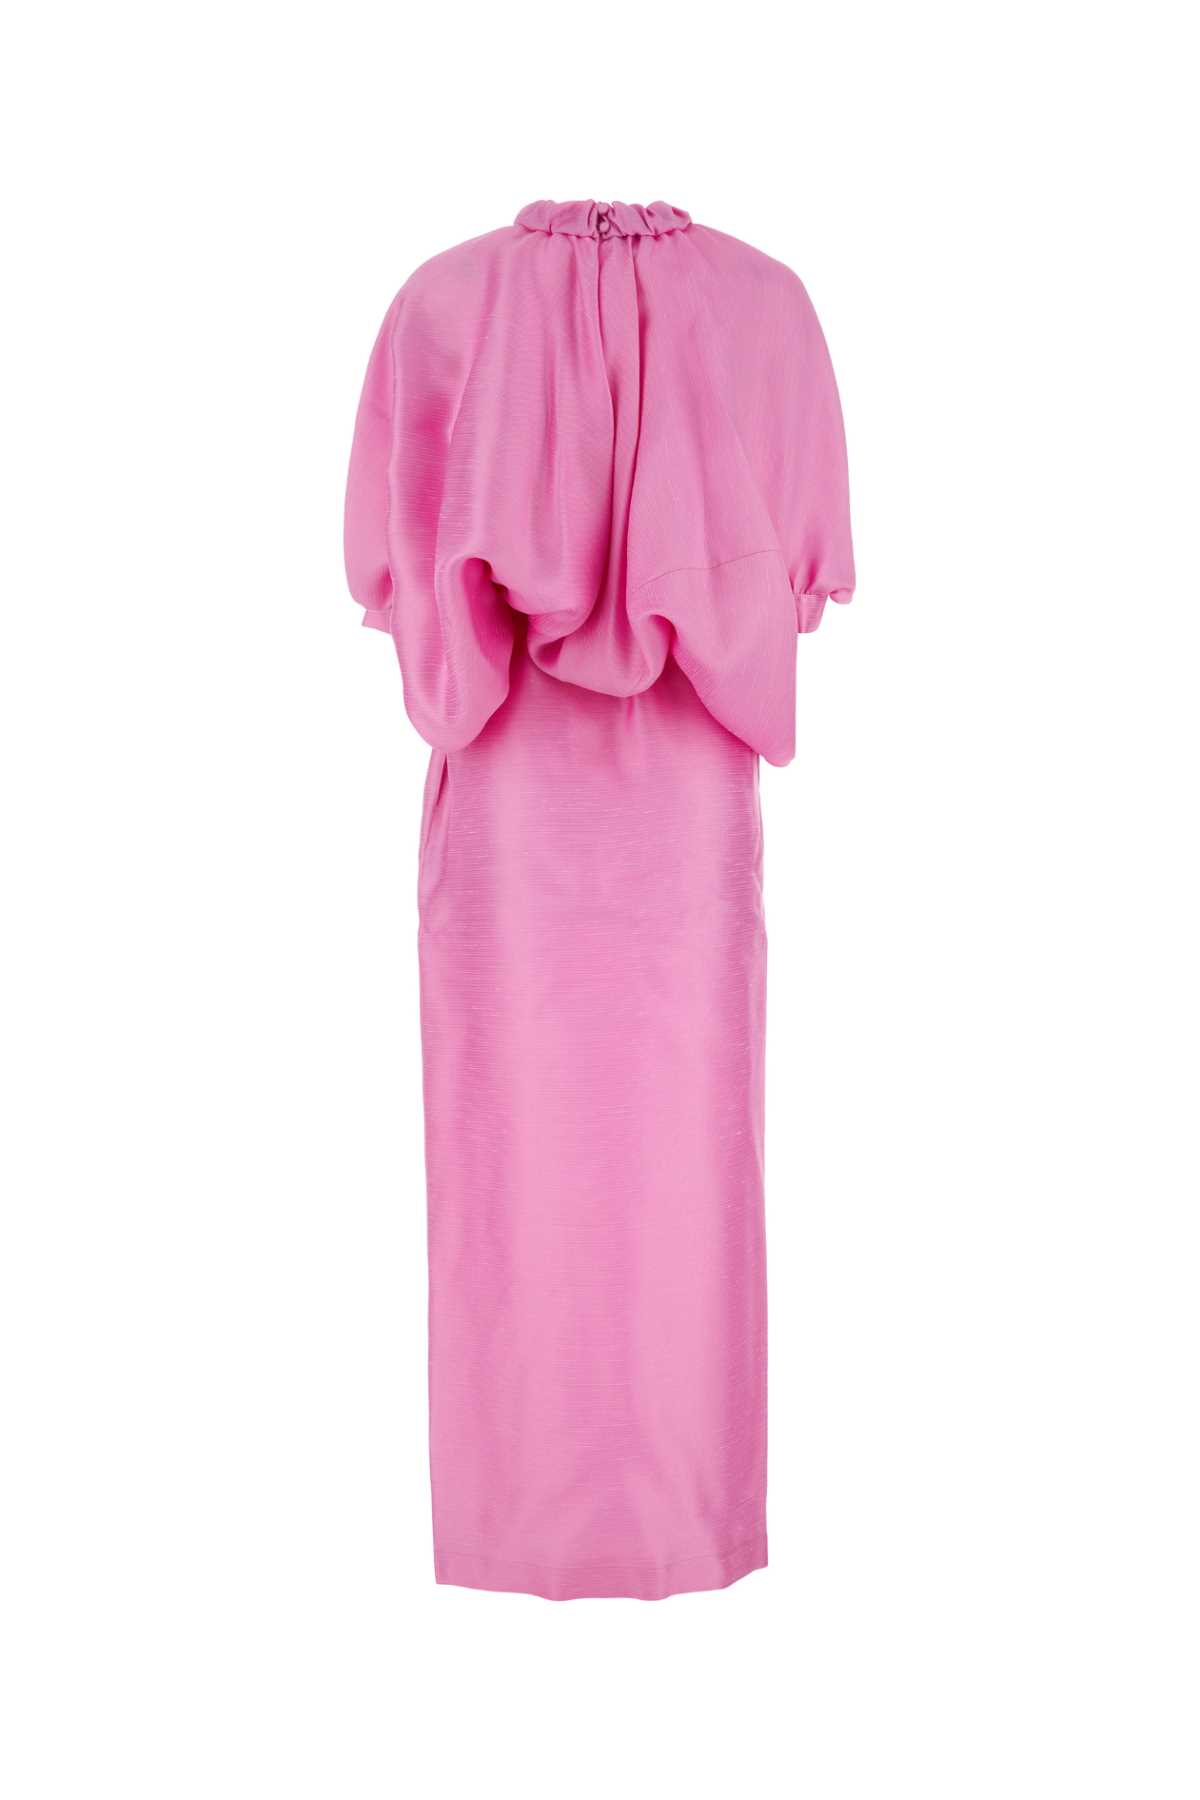 Fendi Pink Silk Blend Dress